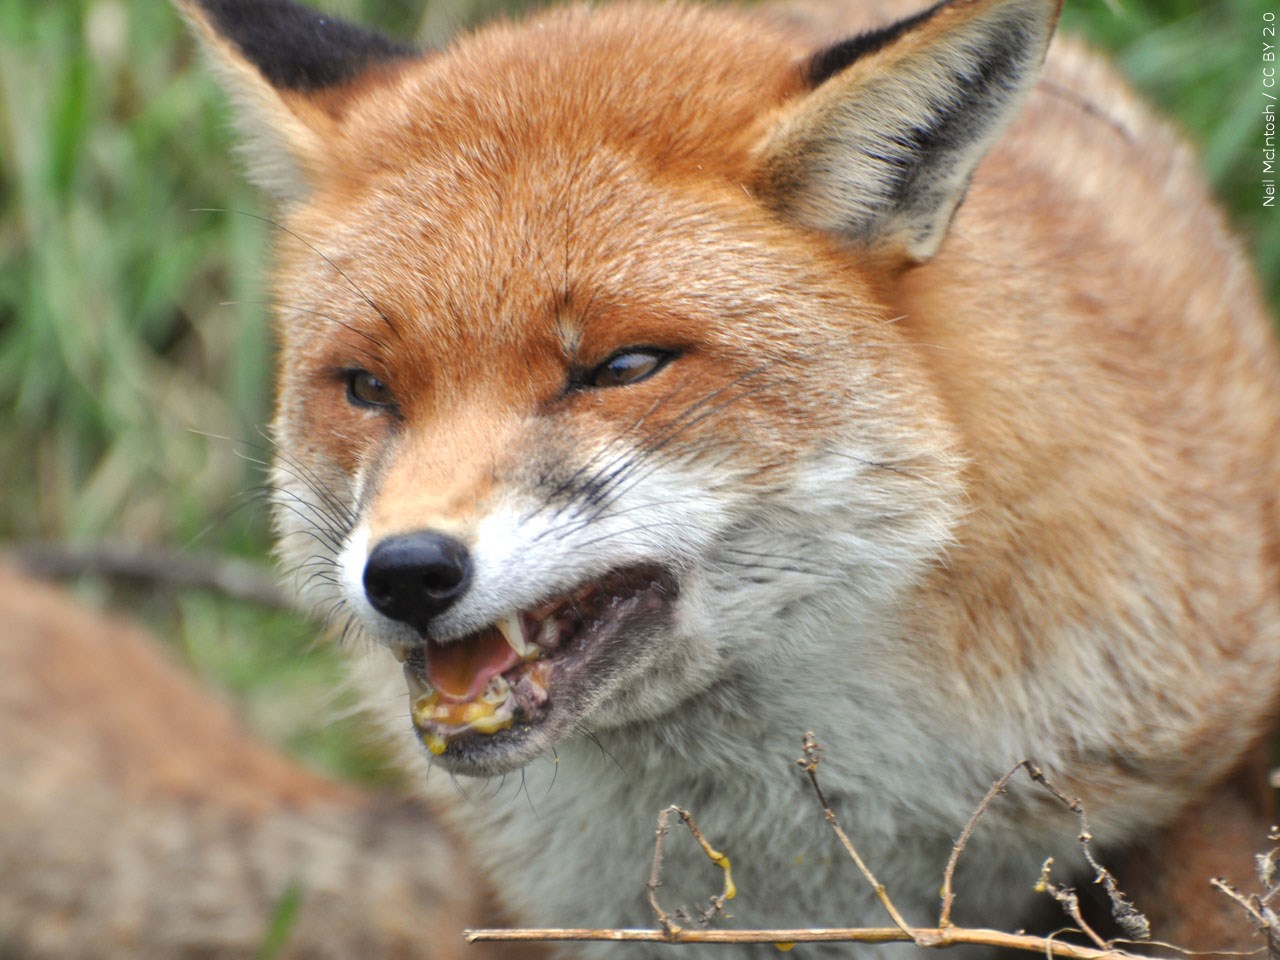 Rabid fox attacks Richmond County resident